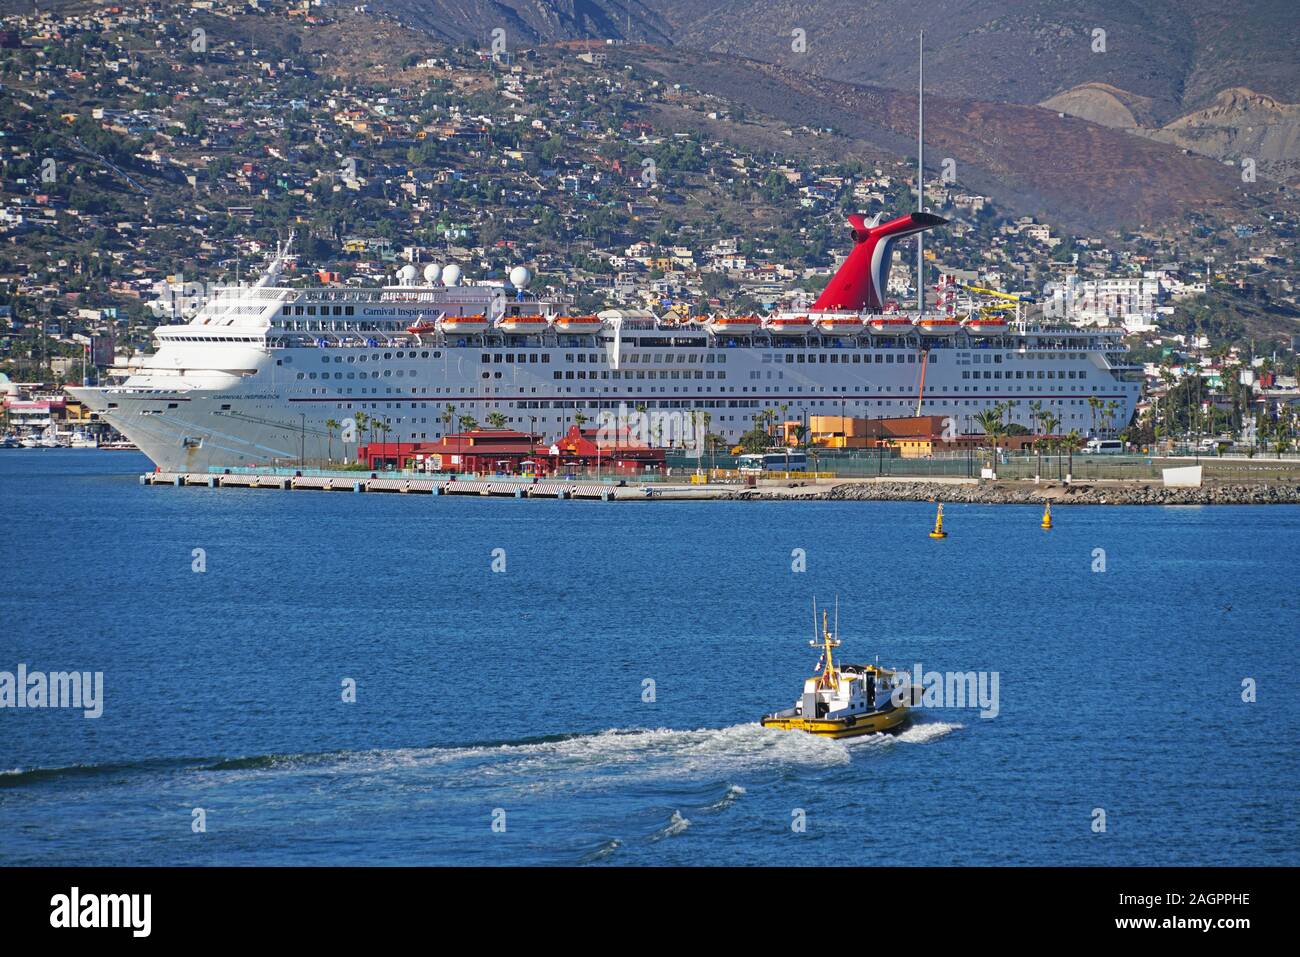 Carnival Inspiration cruise ship in port of Ensenada, Baja California, Mexico. Stock Photo